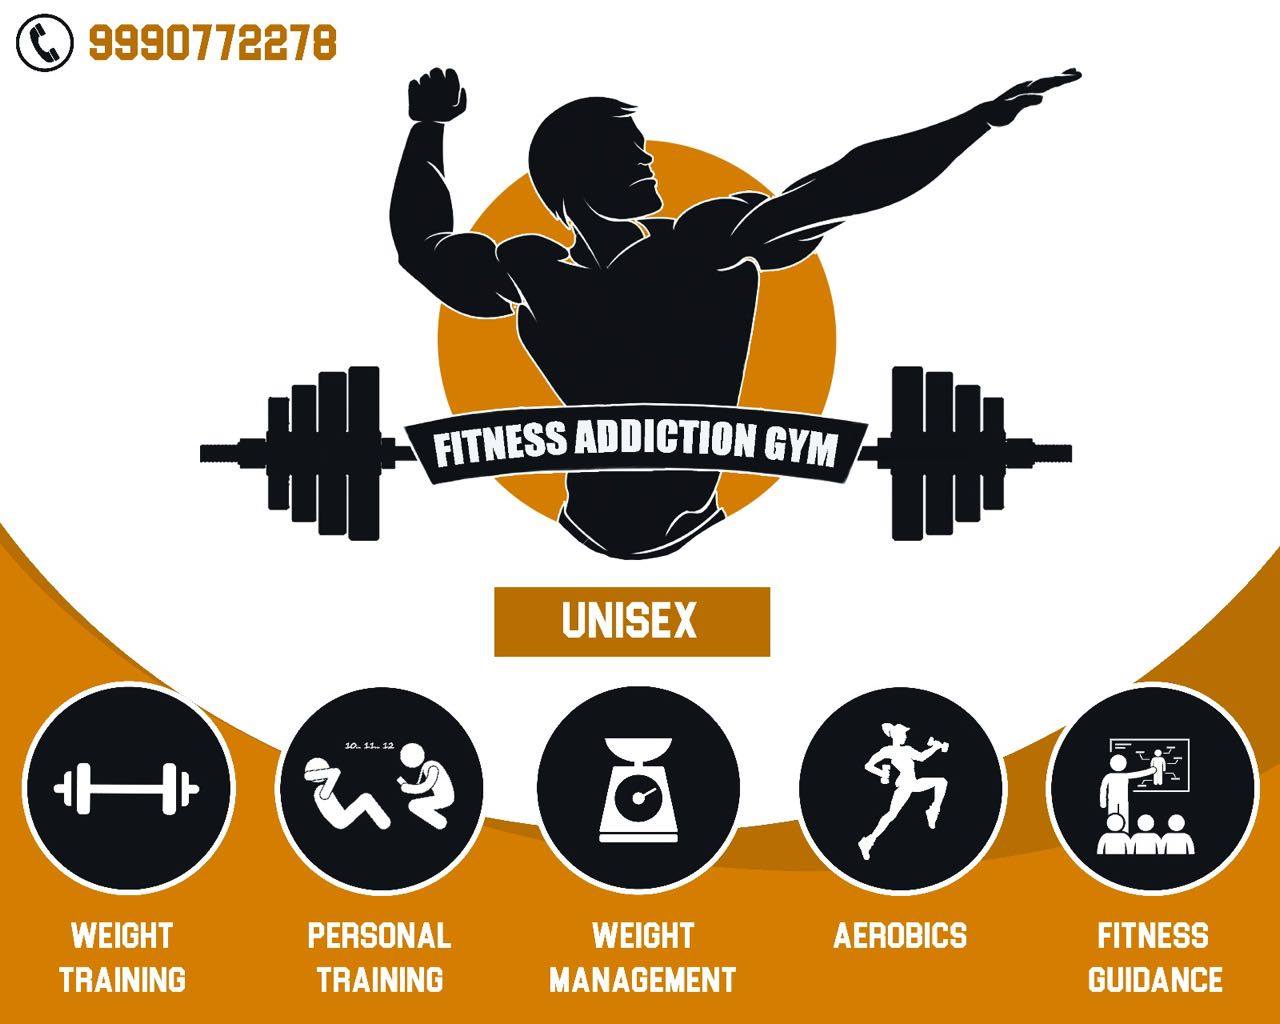 Fitness addiction gym Logo